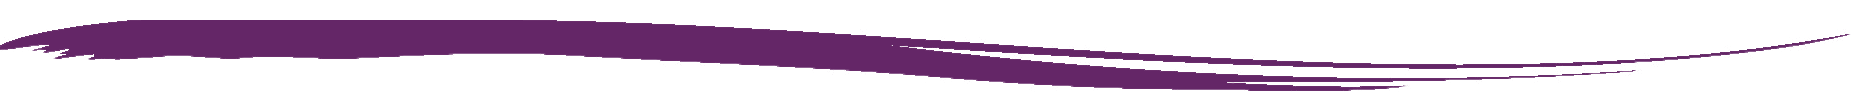 Northeast Arc purple wave